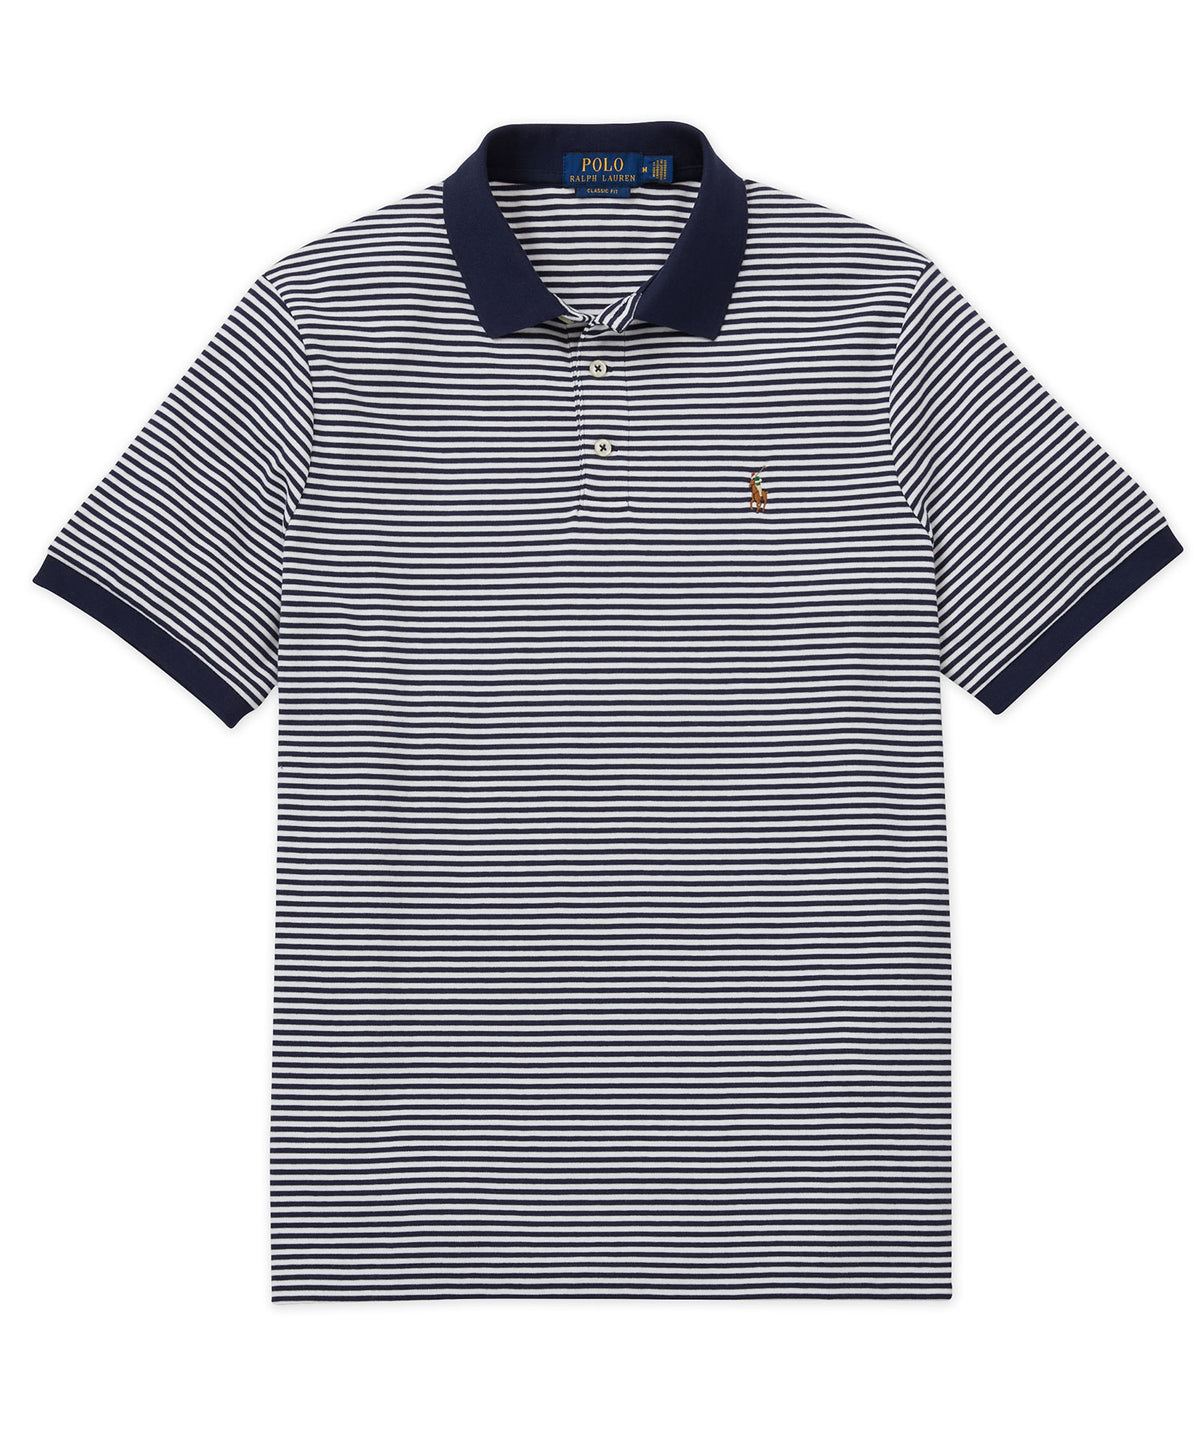 Polo Ralph Lauren Short Sleeve Soft Touch Cotton Stripe Polo Knit Shirt, Men's Big & Tall